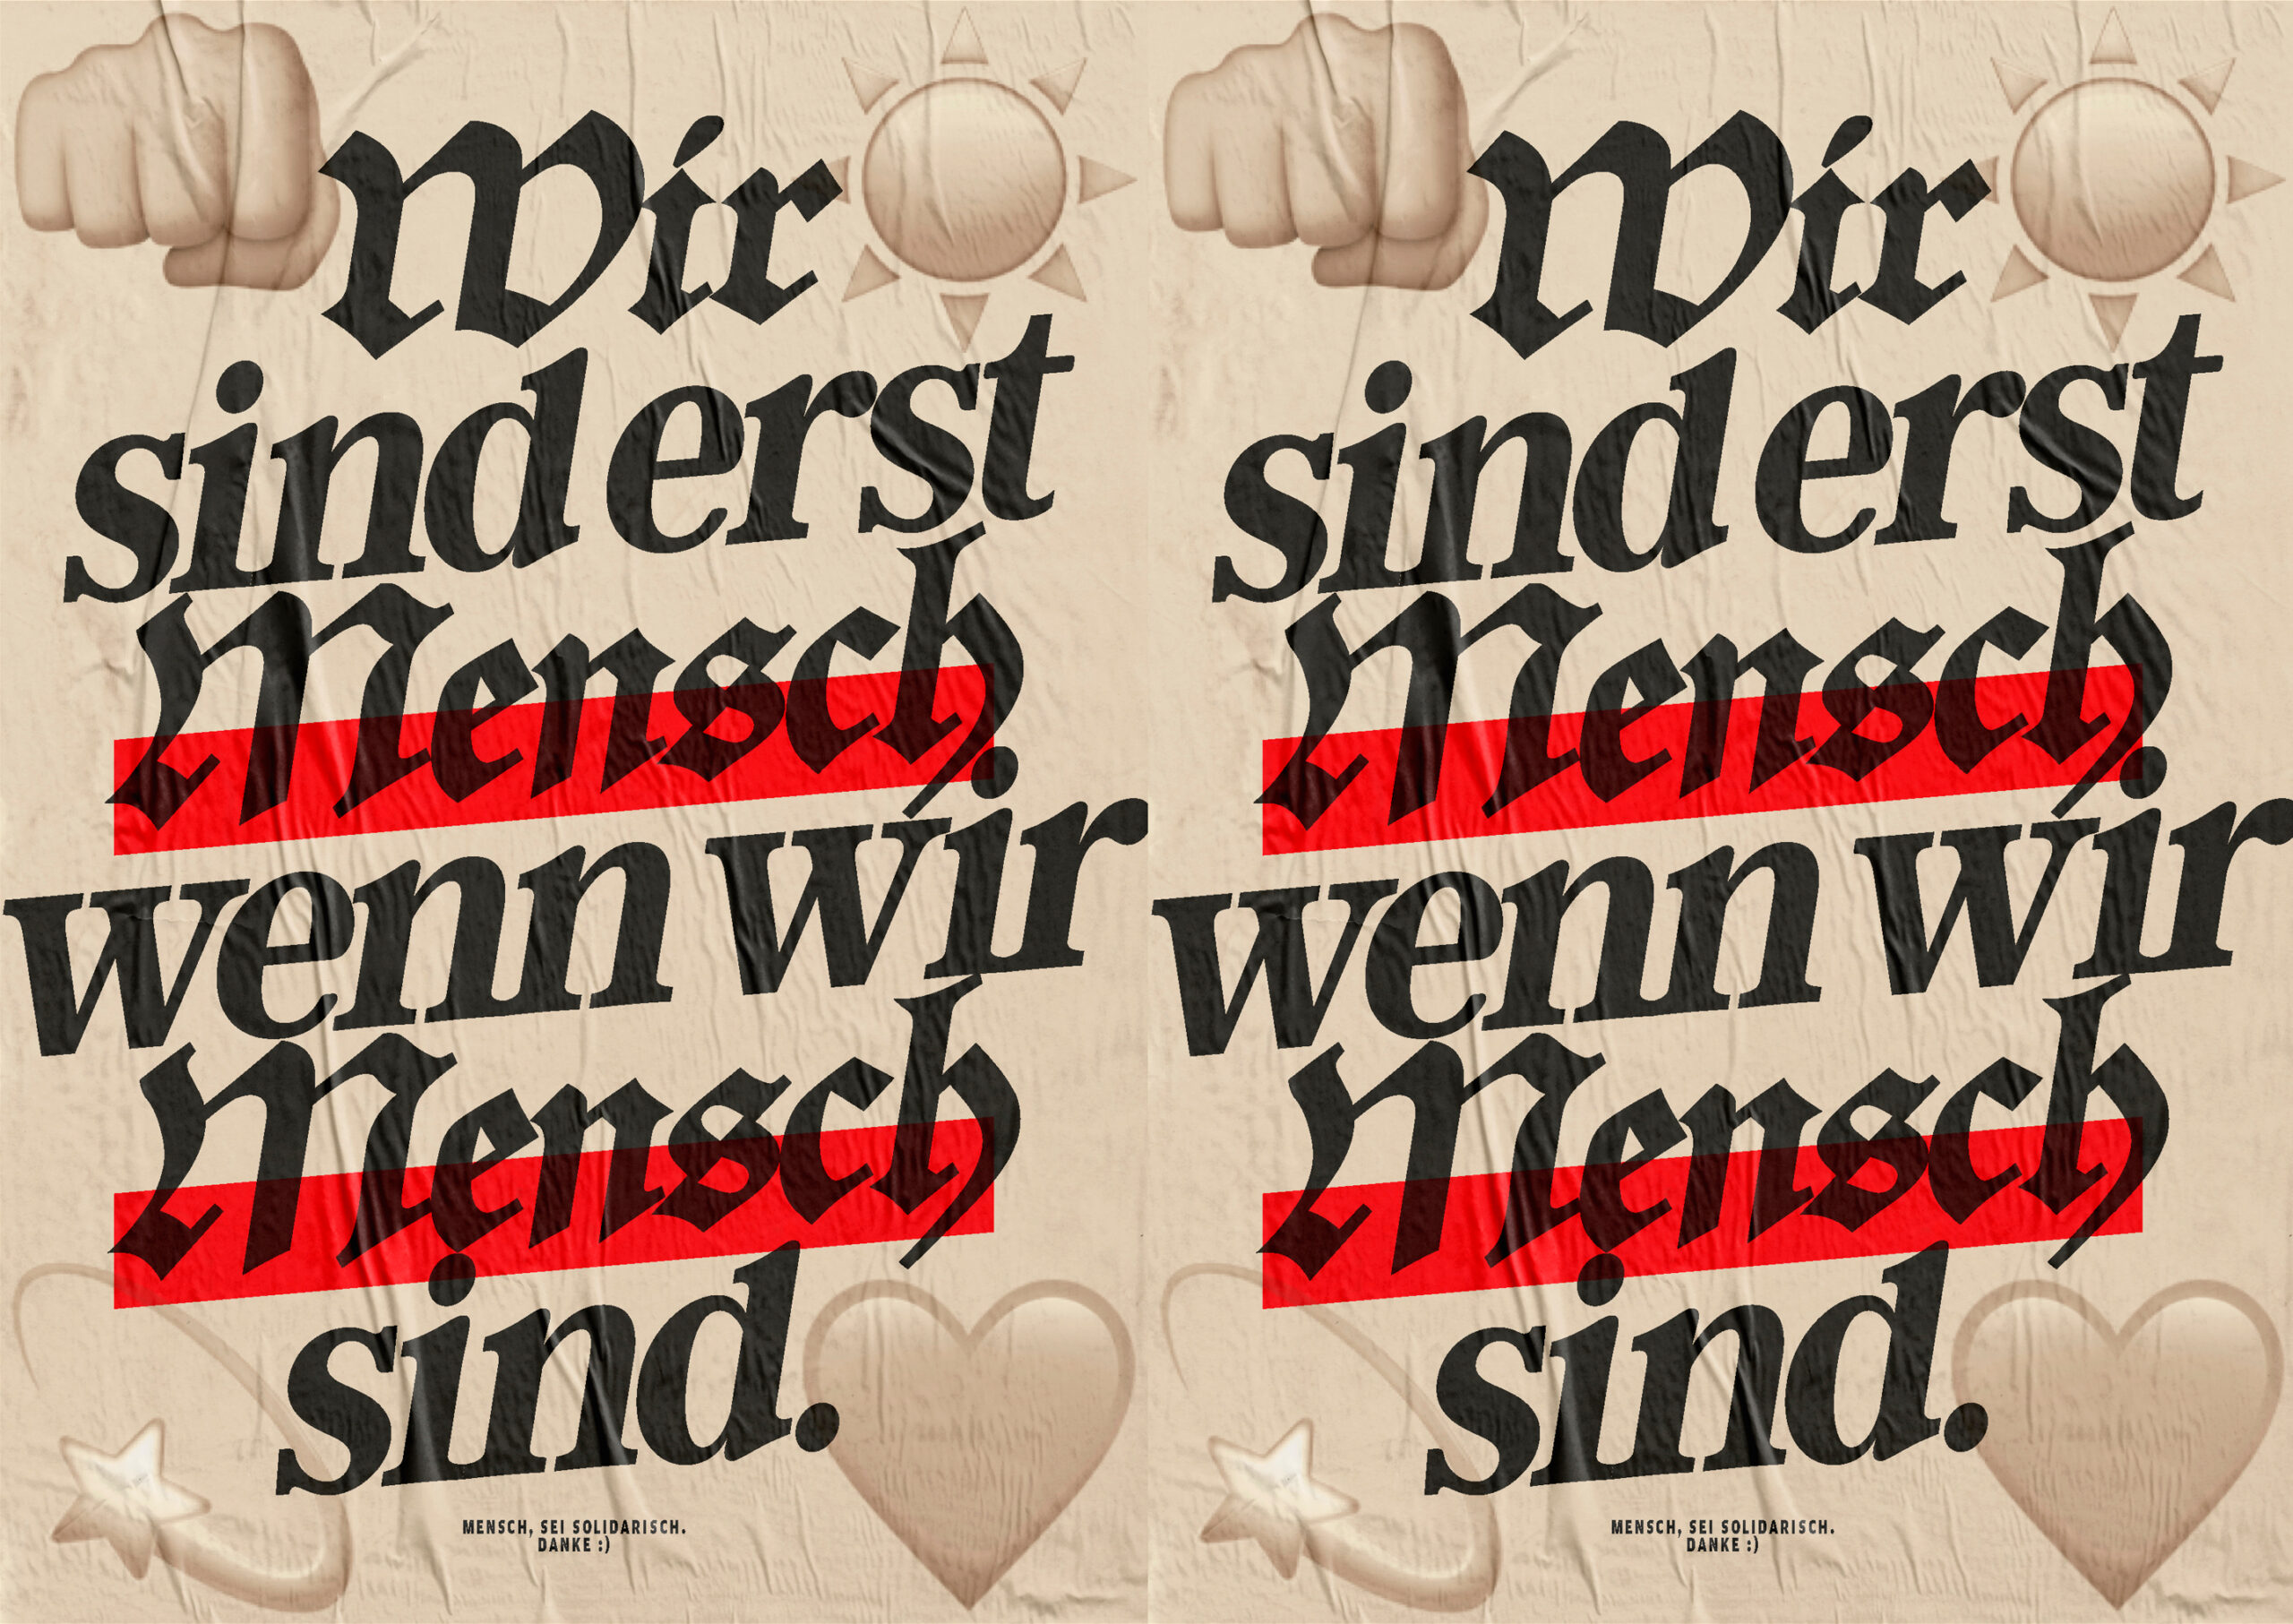 Karsten Rohrbeck: Mensch, sei solidarisch (Poster-Mockup)